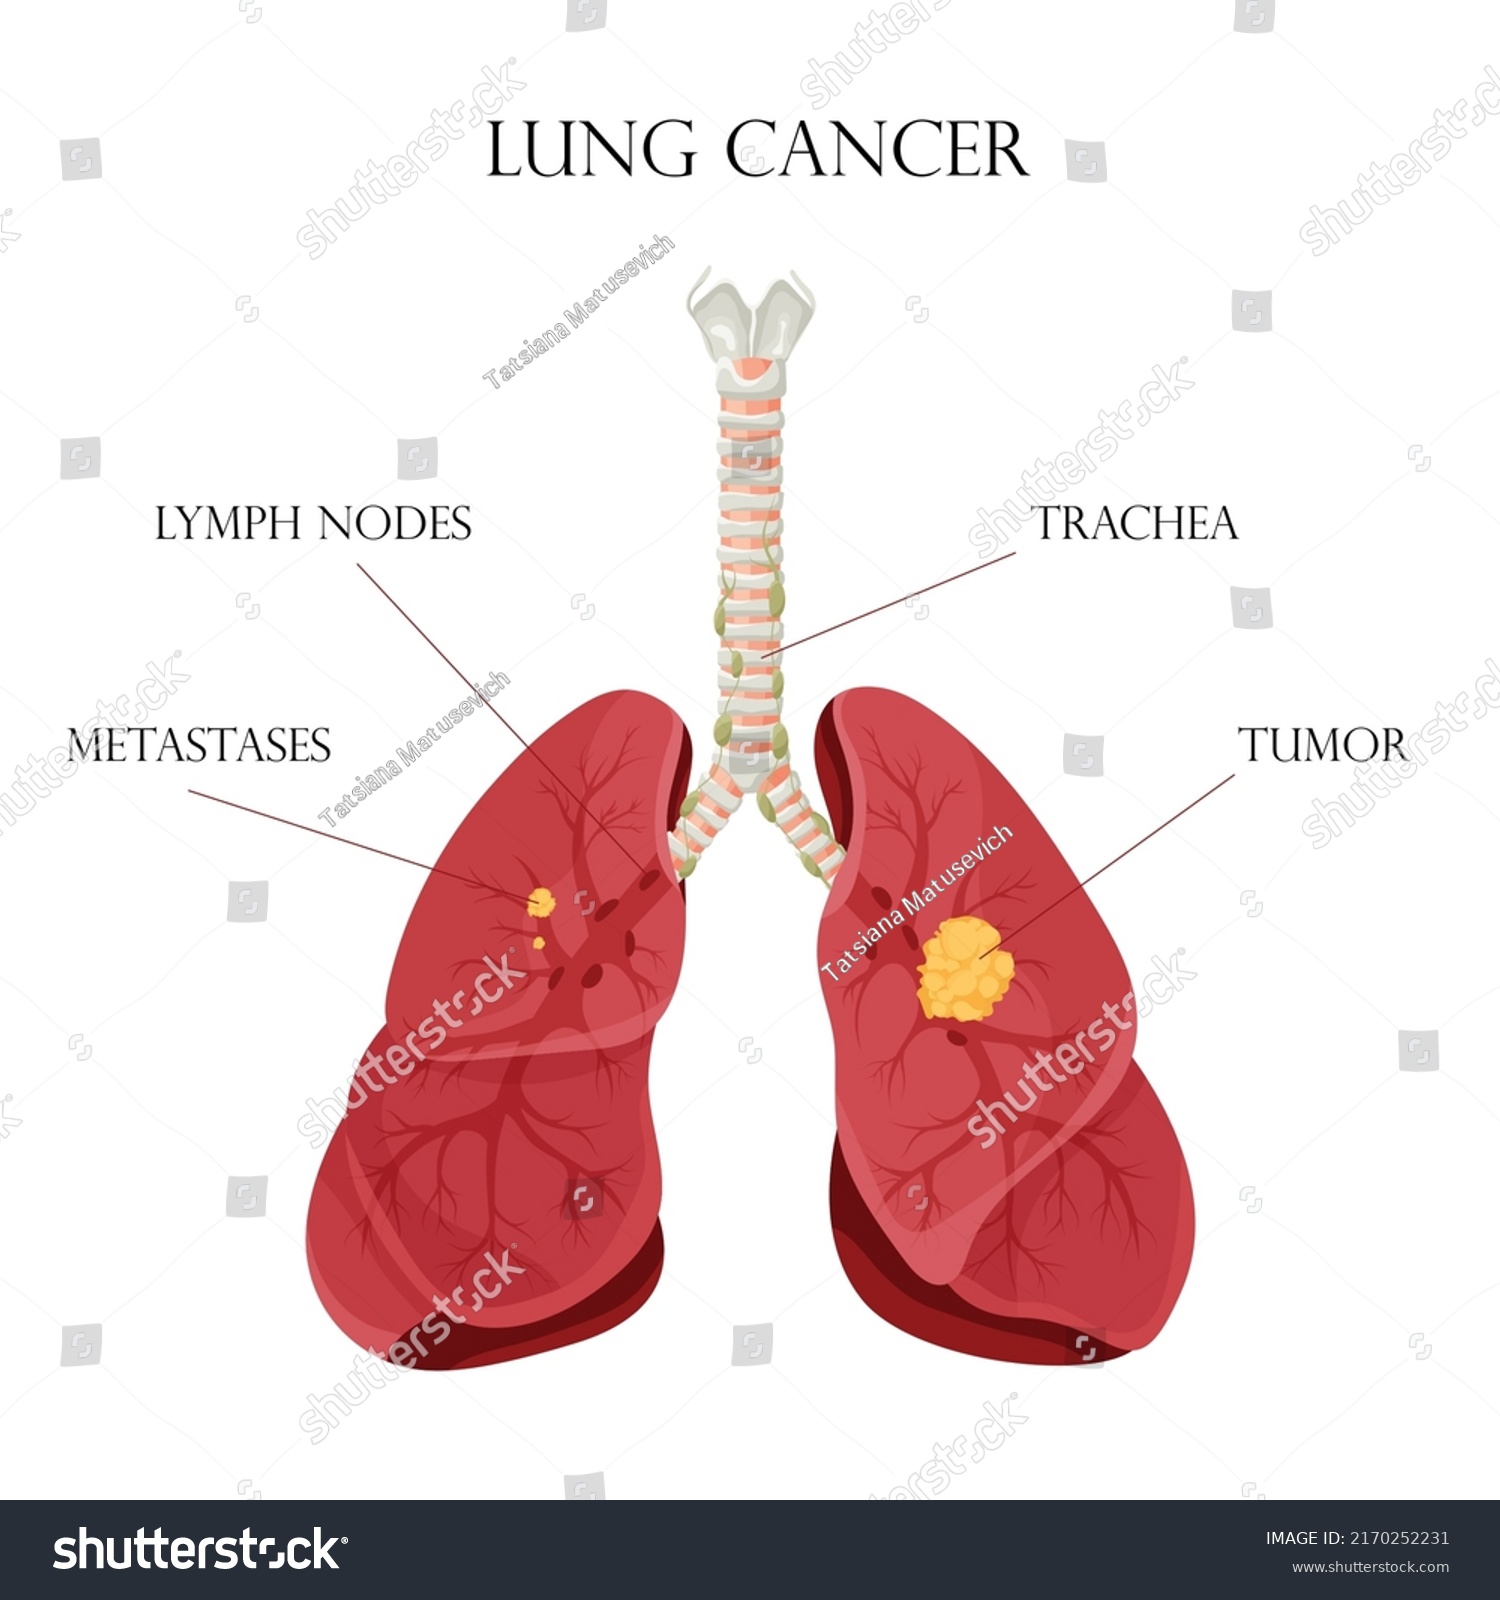 Diagram Lung Cancer Disease Concept Disease Stock Vector (Royalty Free ...